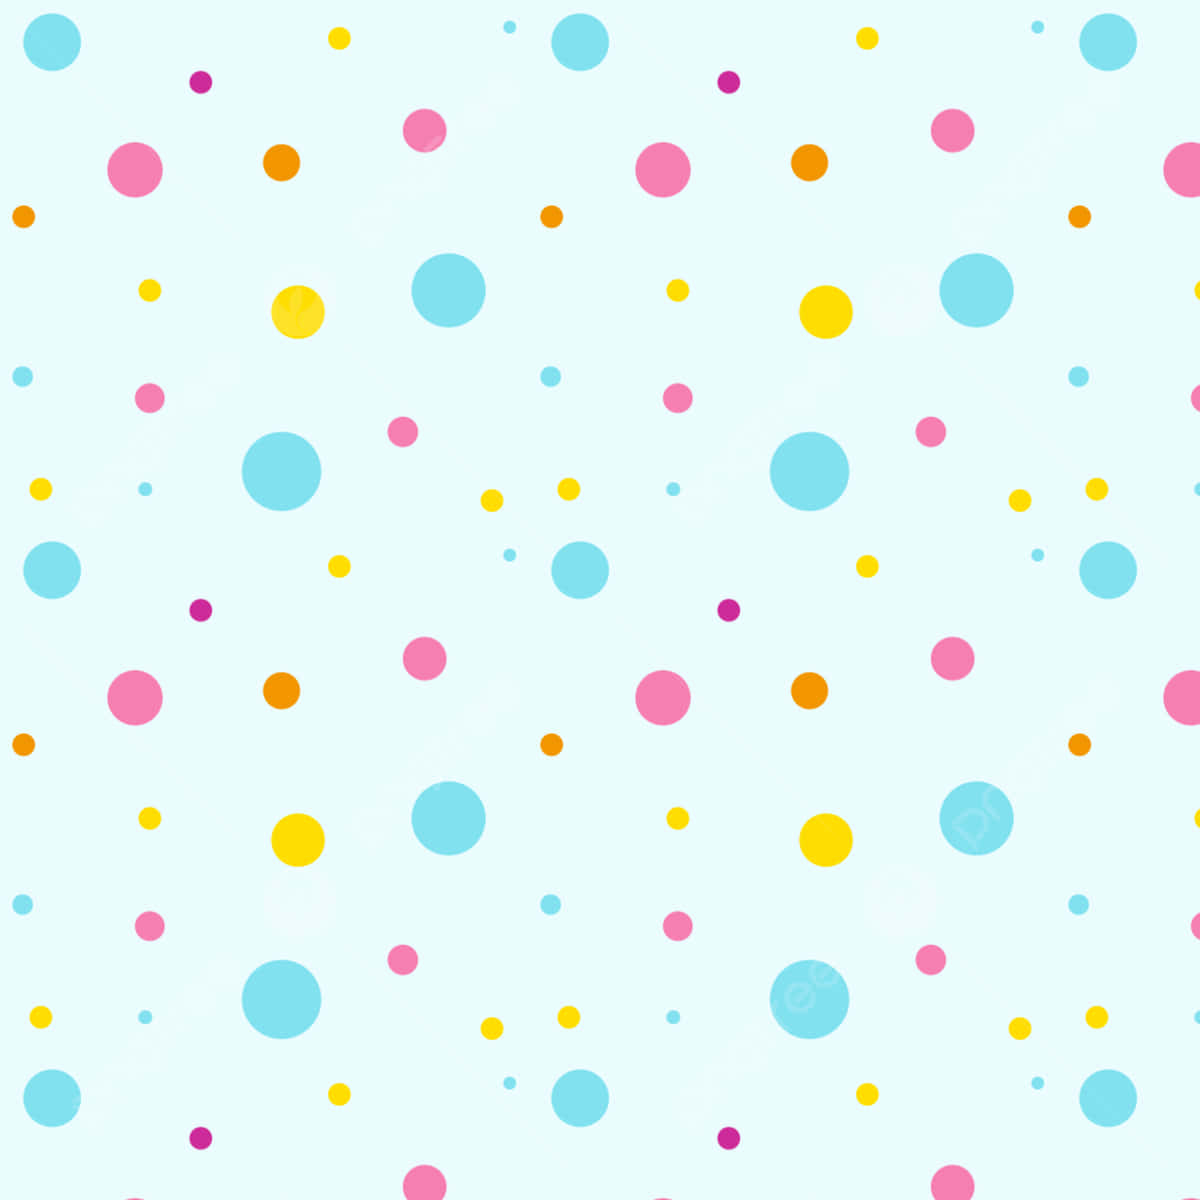 Expressive Pink And White Polka Dot Pattern Wallpaper